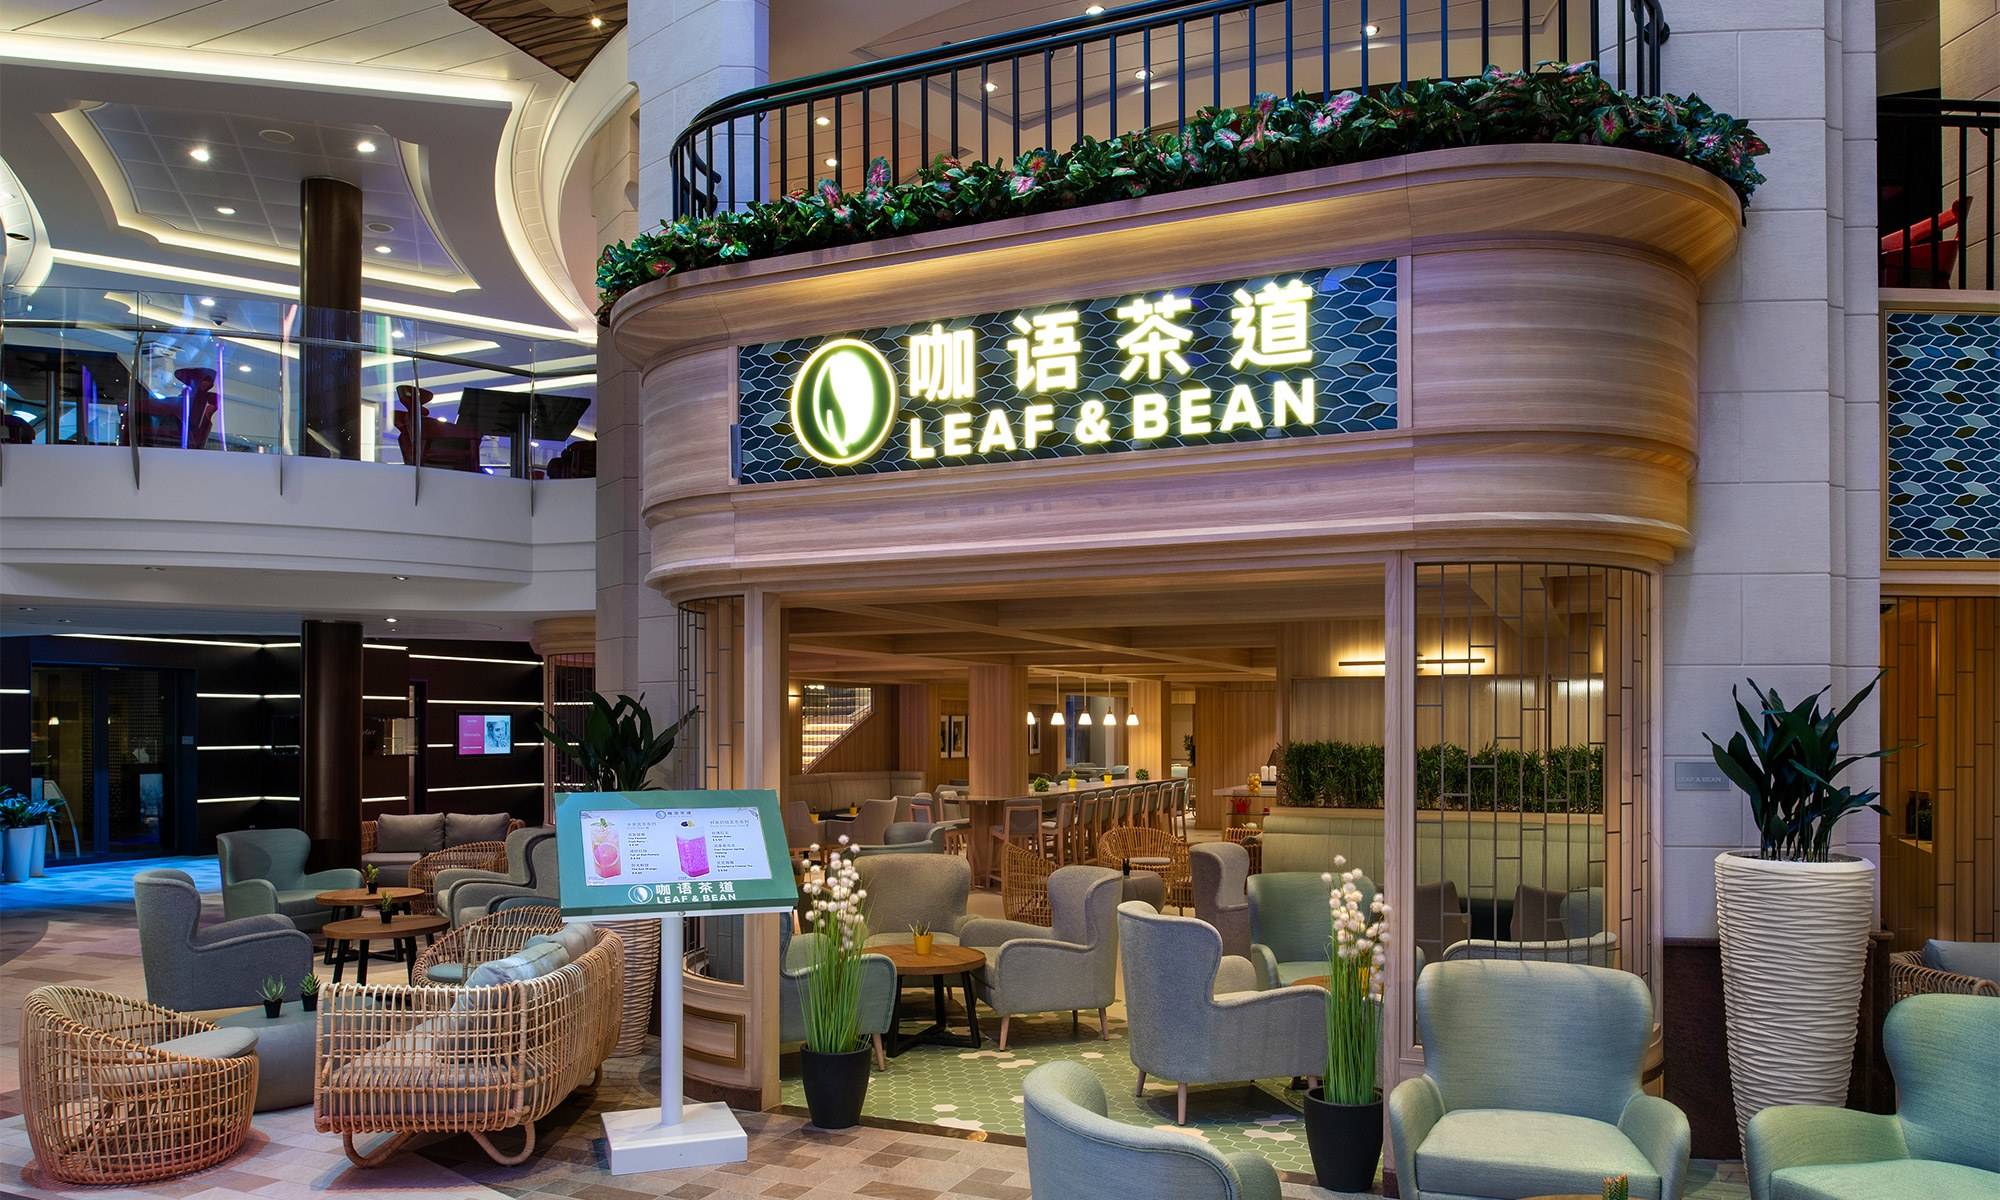 Spectrum of the Seas Leaf Bean